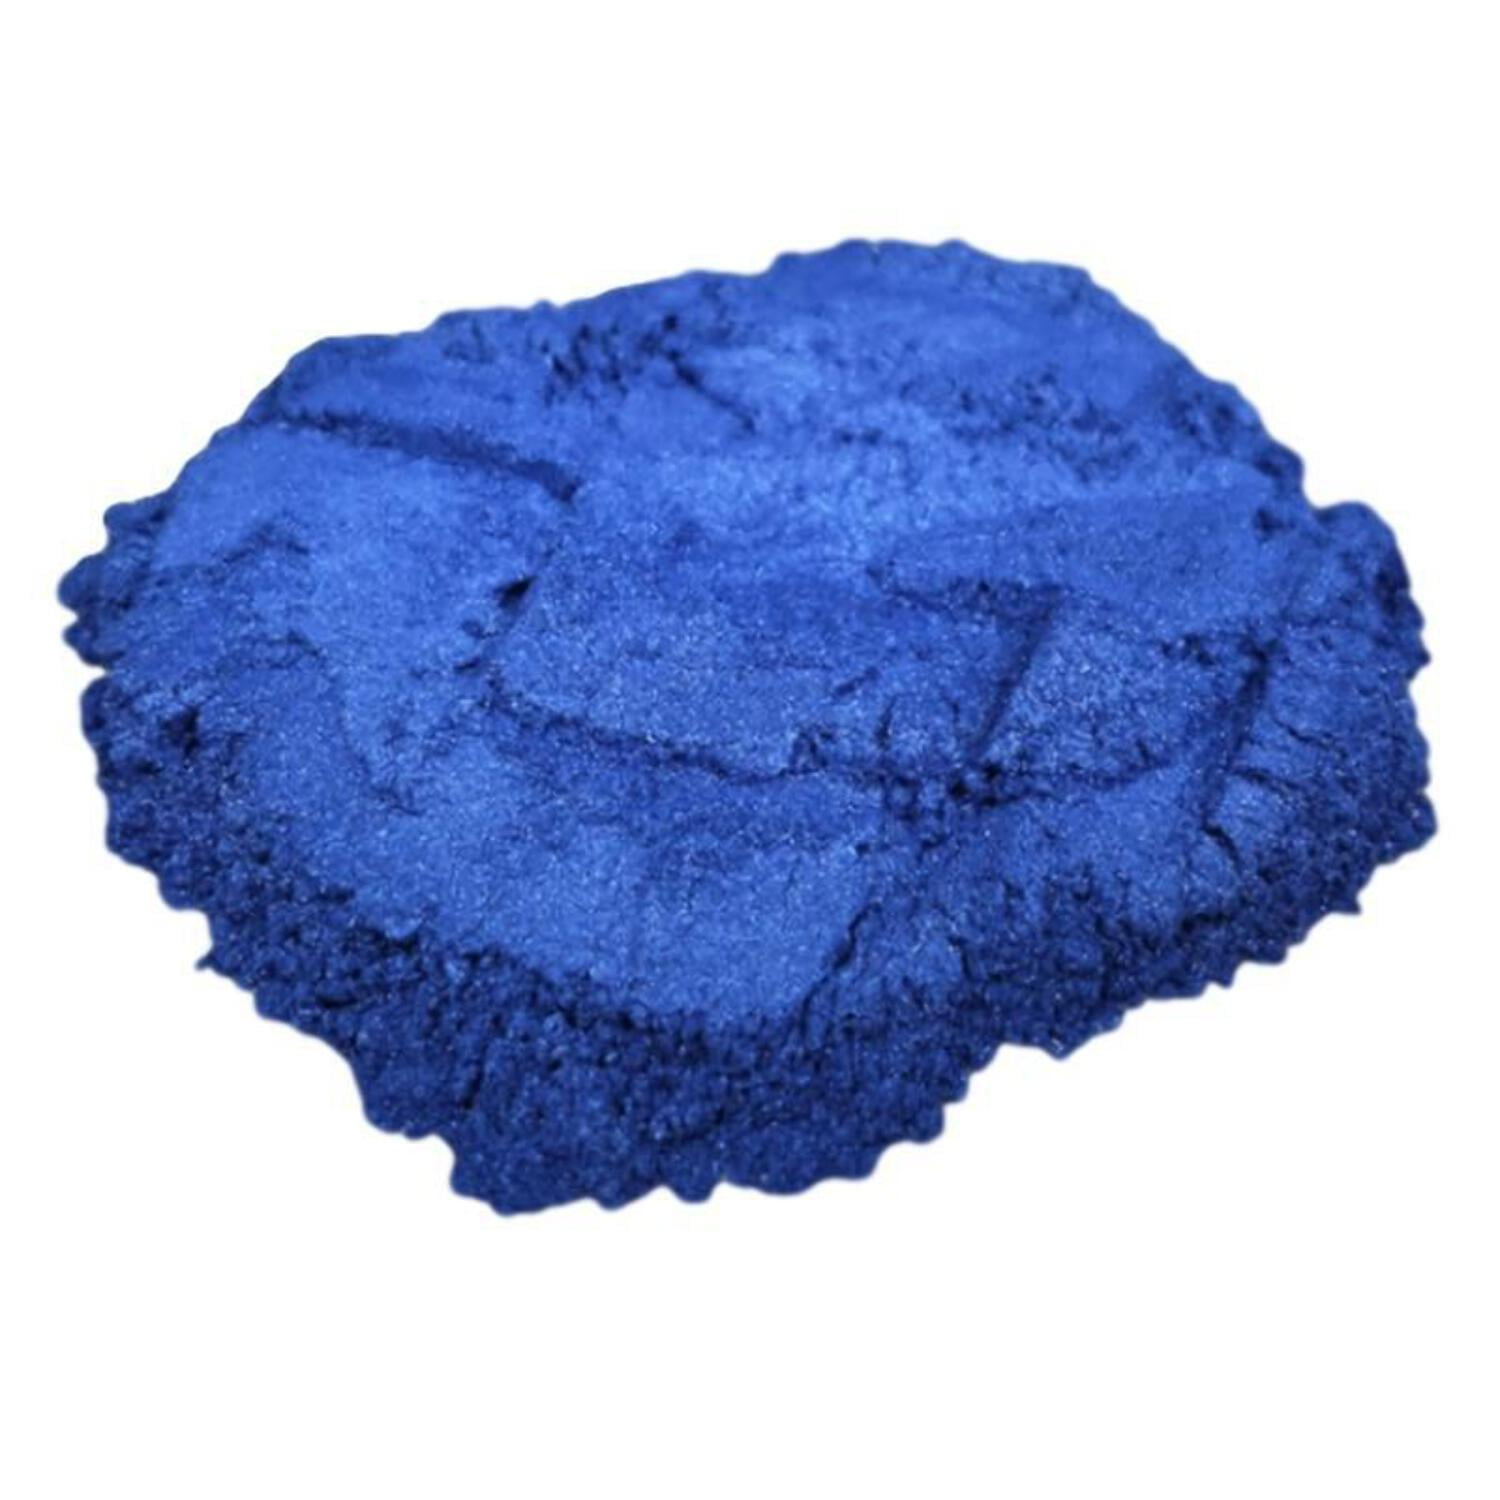 Phoenix Pigments Midnight Blue Epoxy Resin Pigment Powder 2oz/56g